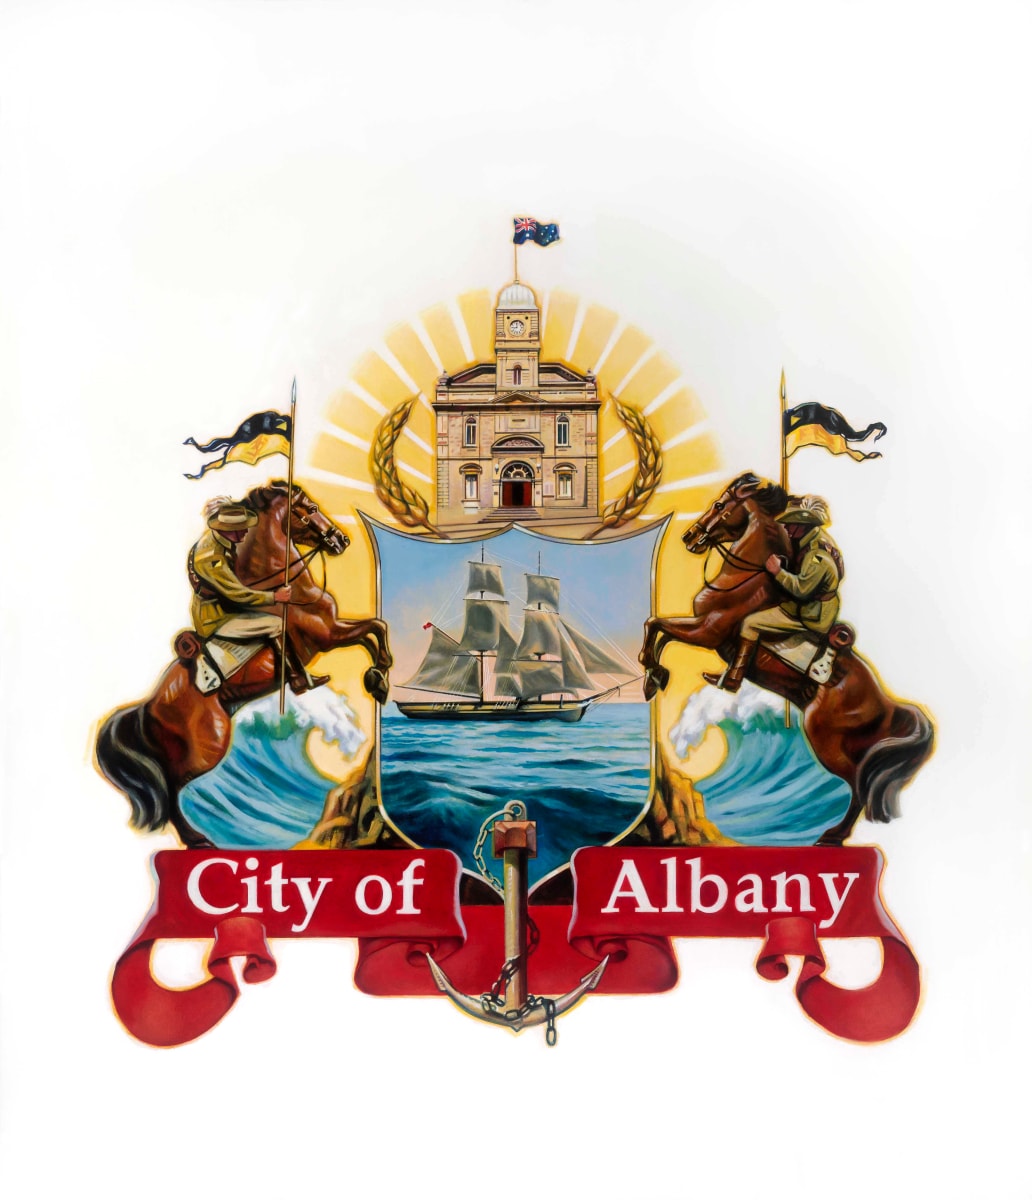 City of Albany Crest by Mark SOFOLIS 